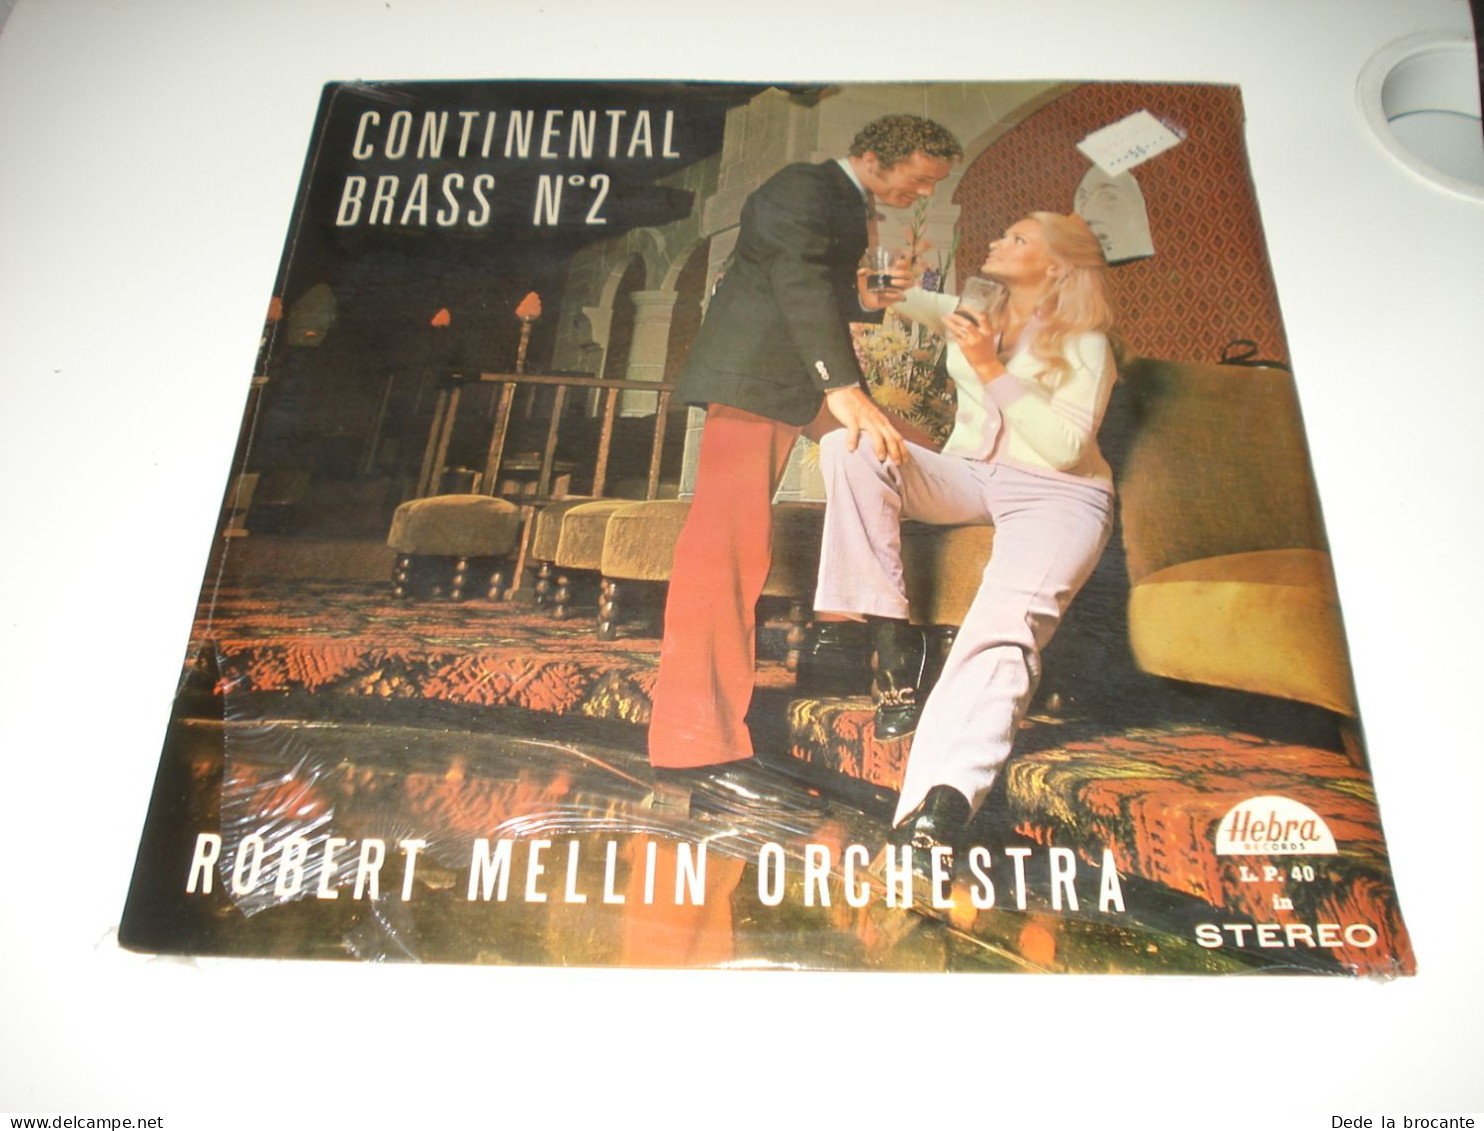 B6 /  LP - Continental Brass N°2 - Robert Mellin Orchestra  - Sealed - MINT - Country Y Folk